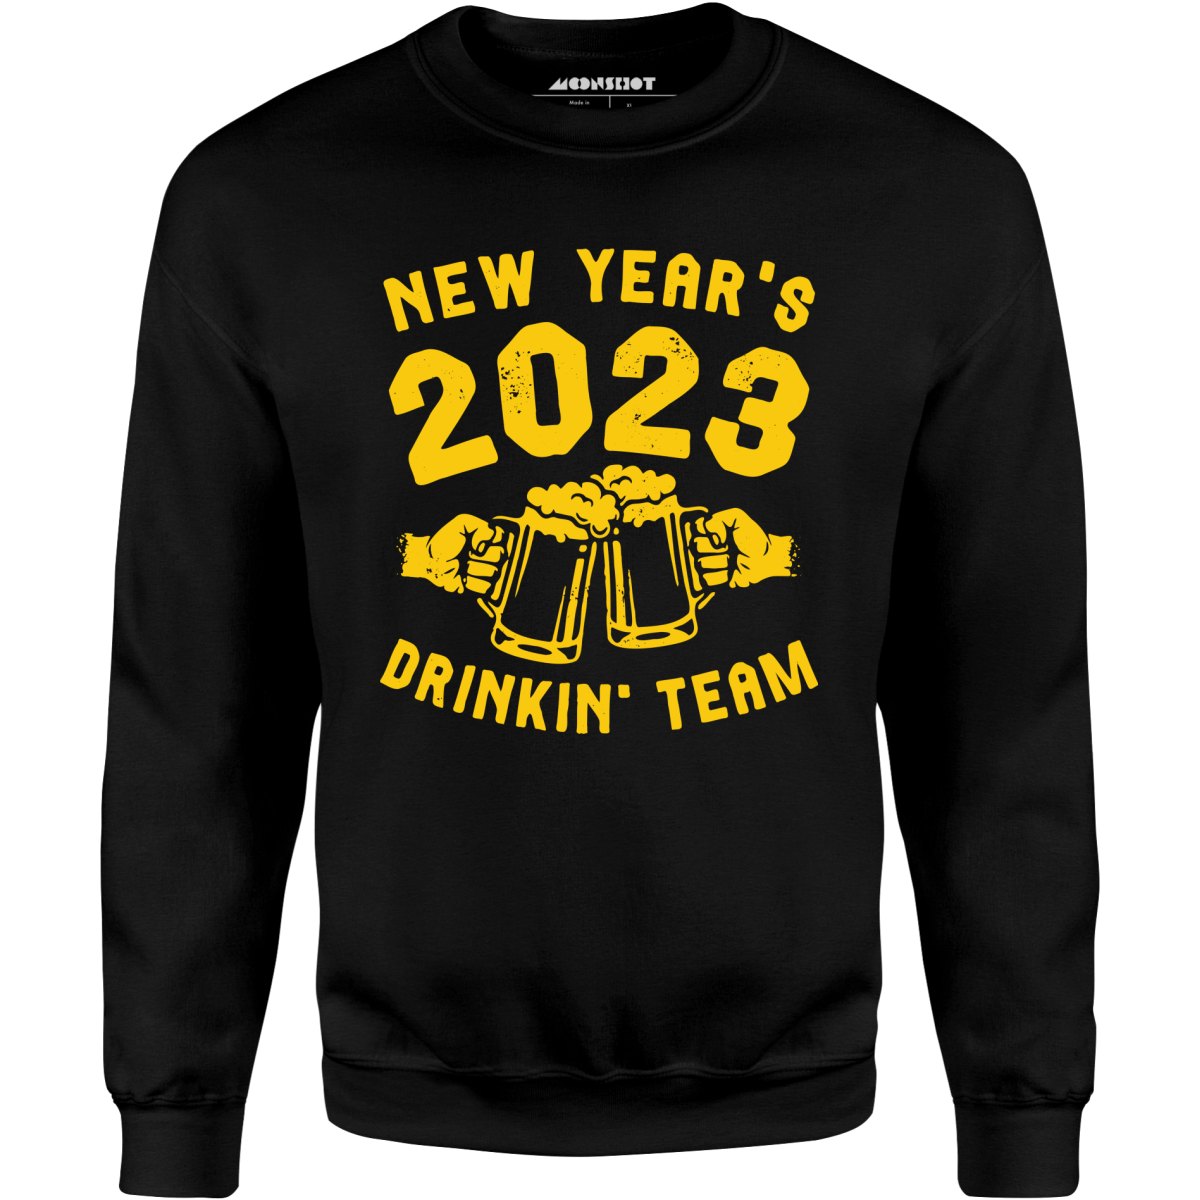 New Year's 2023 Drinkin' Team - Unisex Sweatshirt